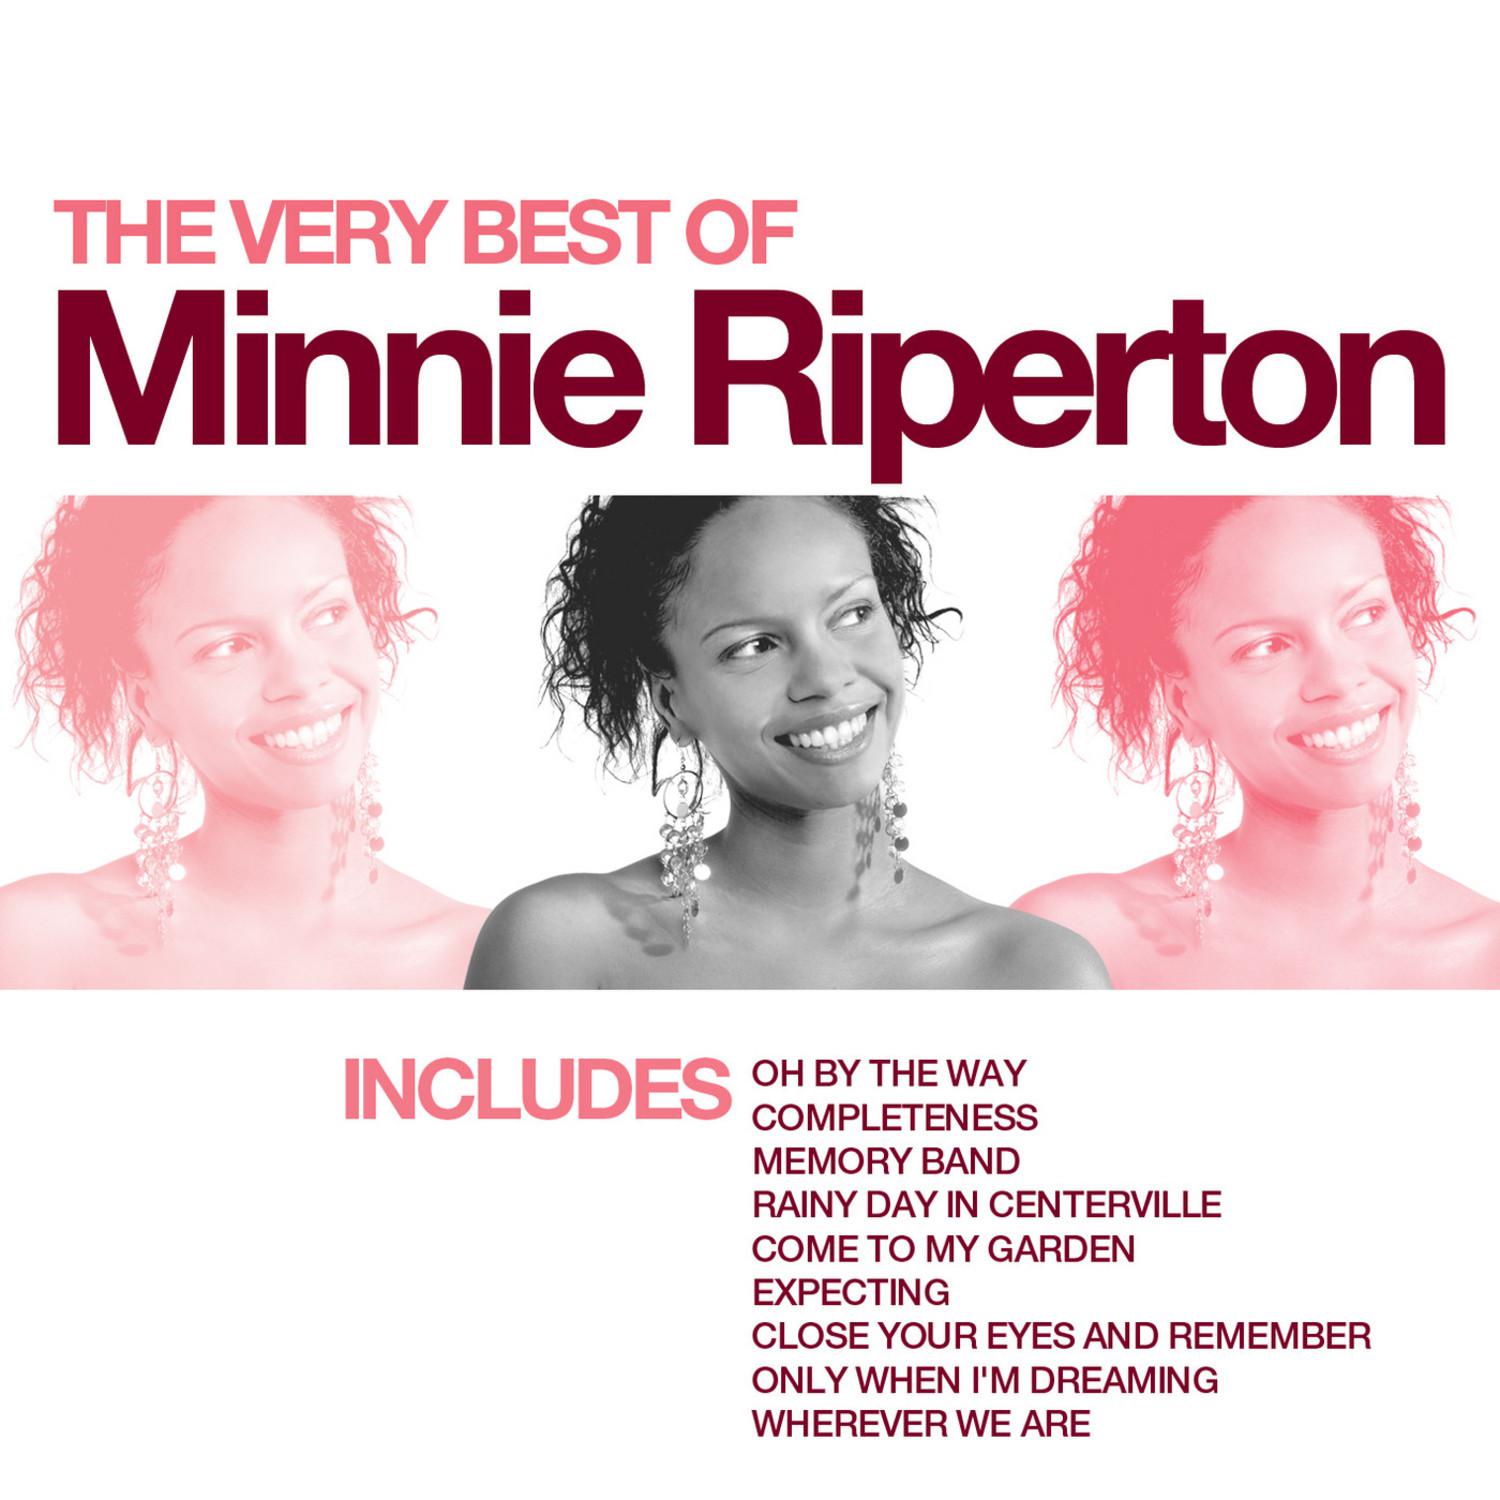 The Very Best of Minnie Riperton